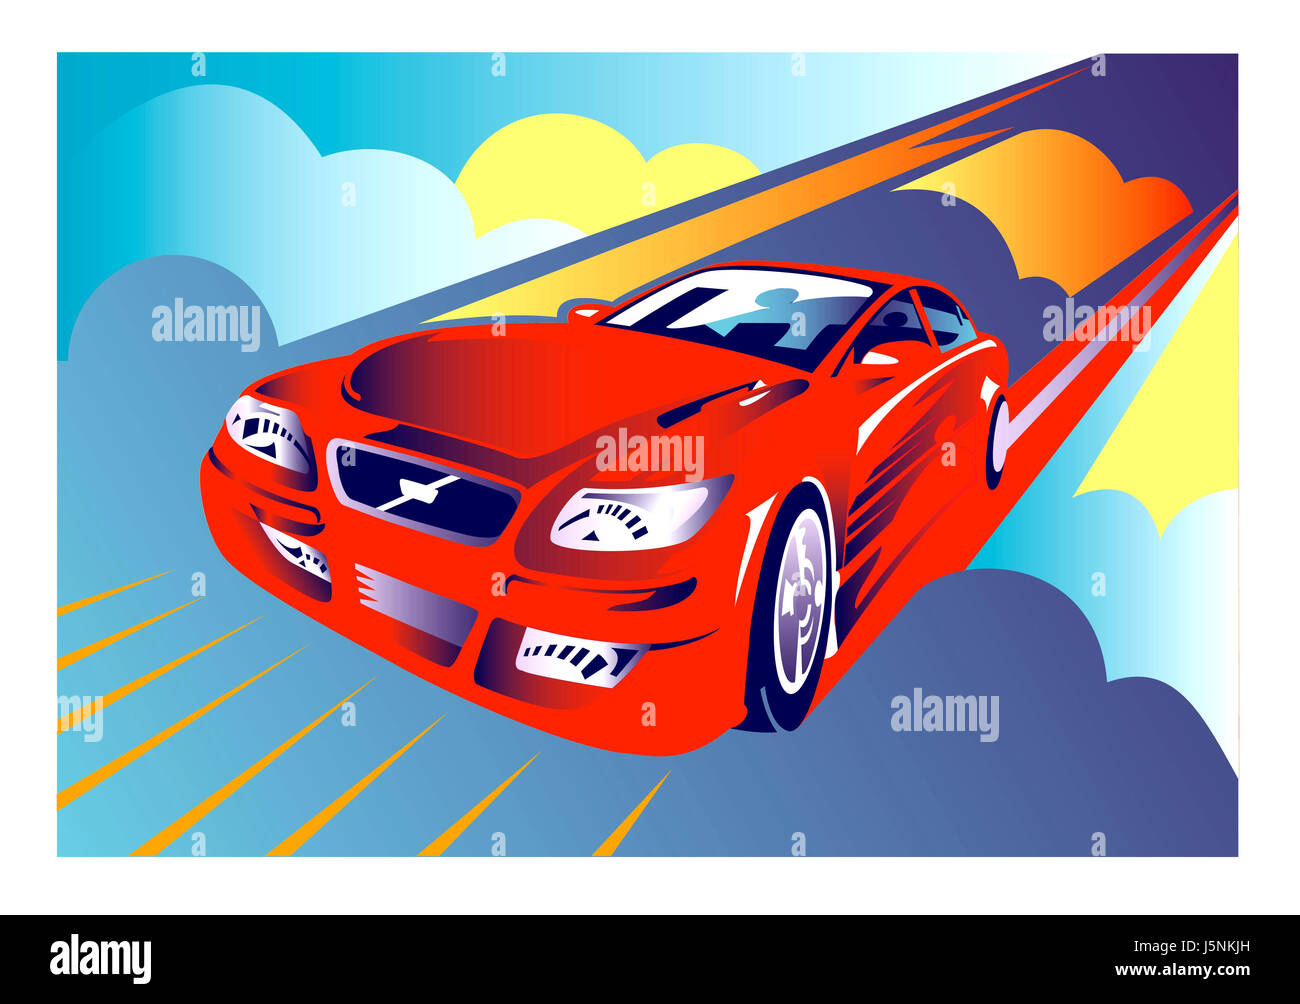 32,730 Auto Manufacturer Logos Images, Stock Photos, 3D objects, & Vectors